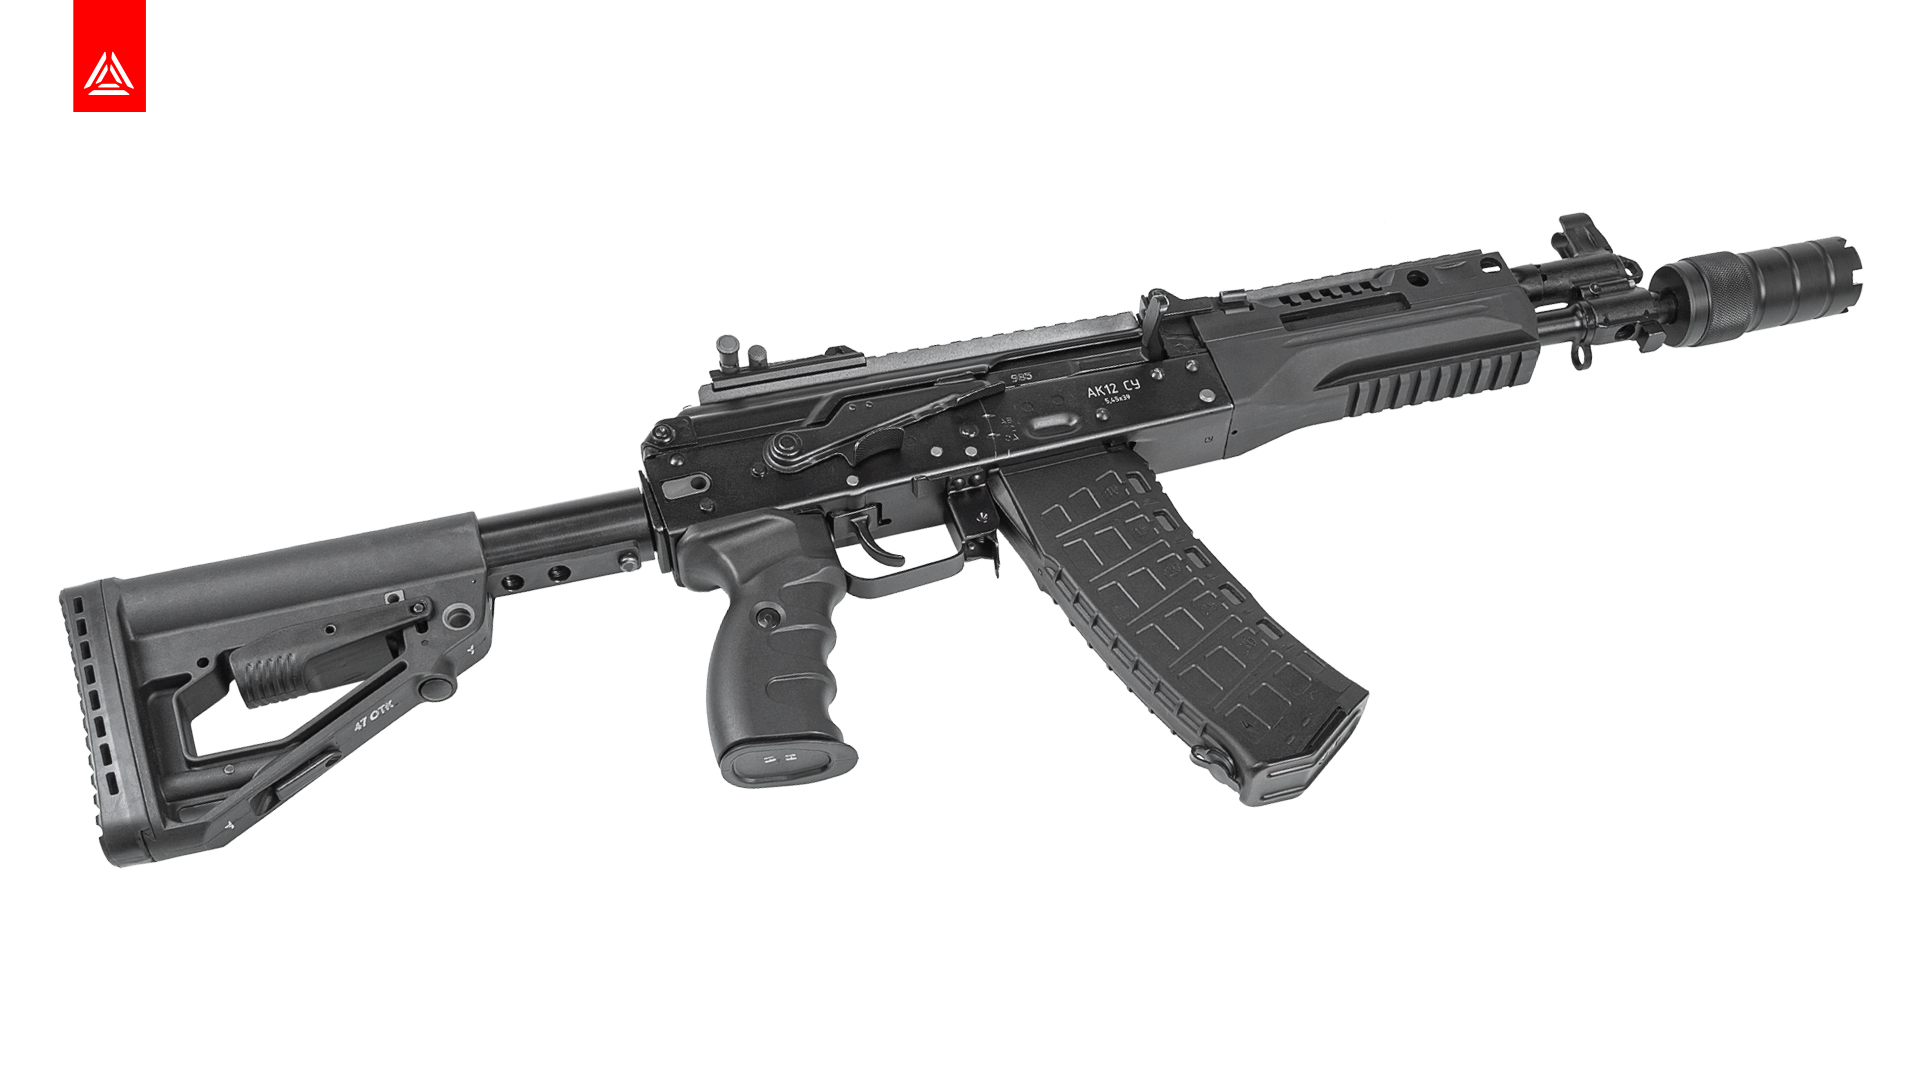 The shortened AK-12 Irbis-k